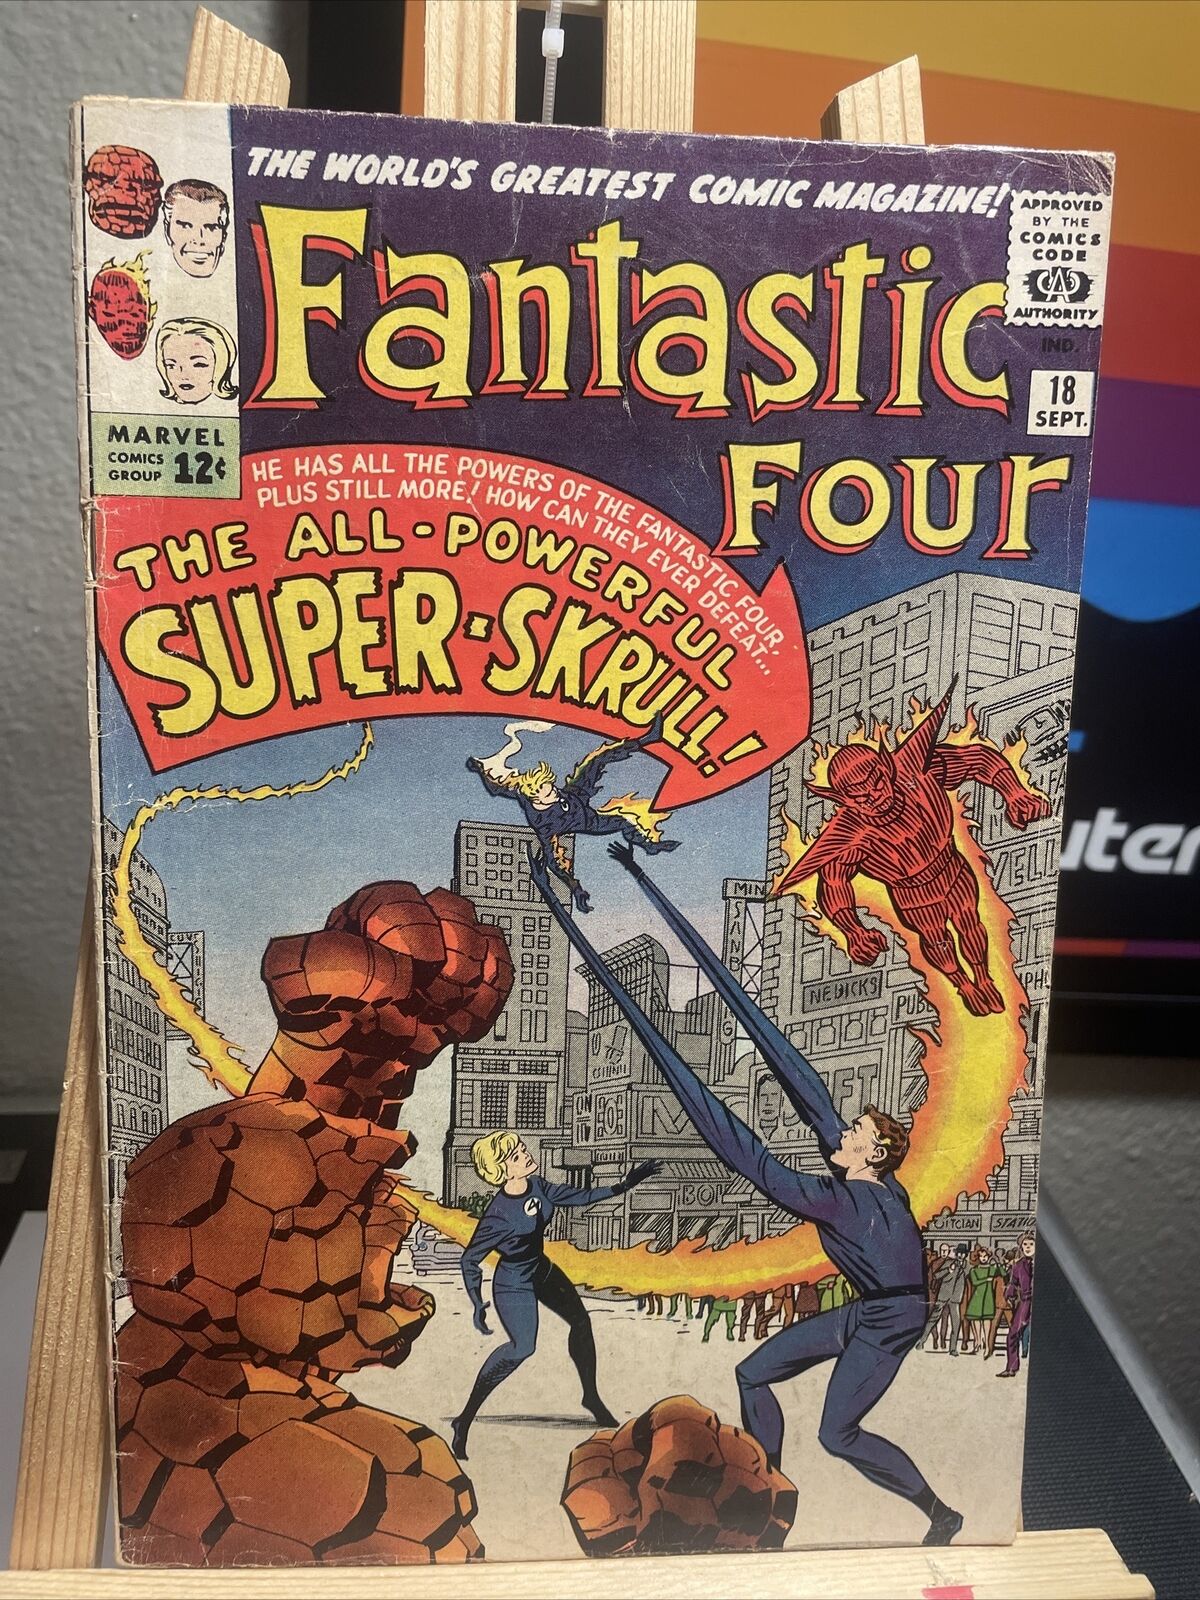 FANTASTIC FOUR #18 1963 1ST APP. & ORIGIN SUPER SKRULL JACK KIRBY Marvel Comics